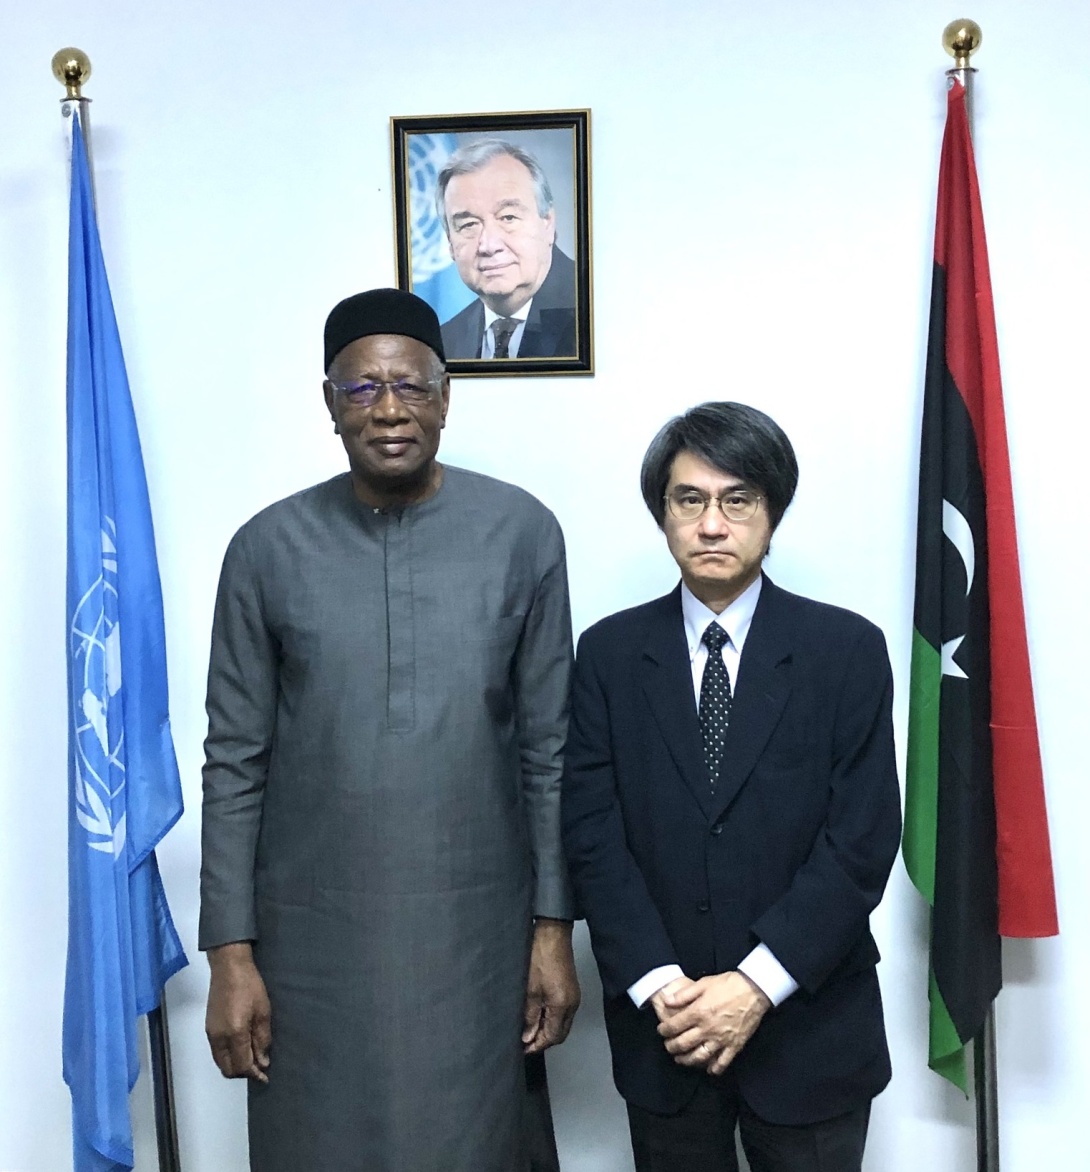 UN envoy to Libya Abdoulaye Bathily